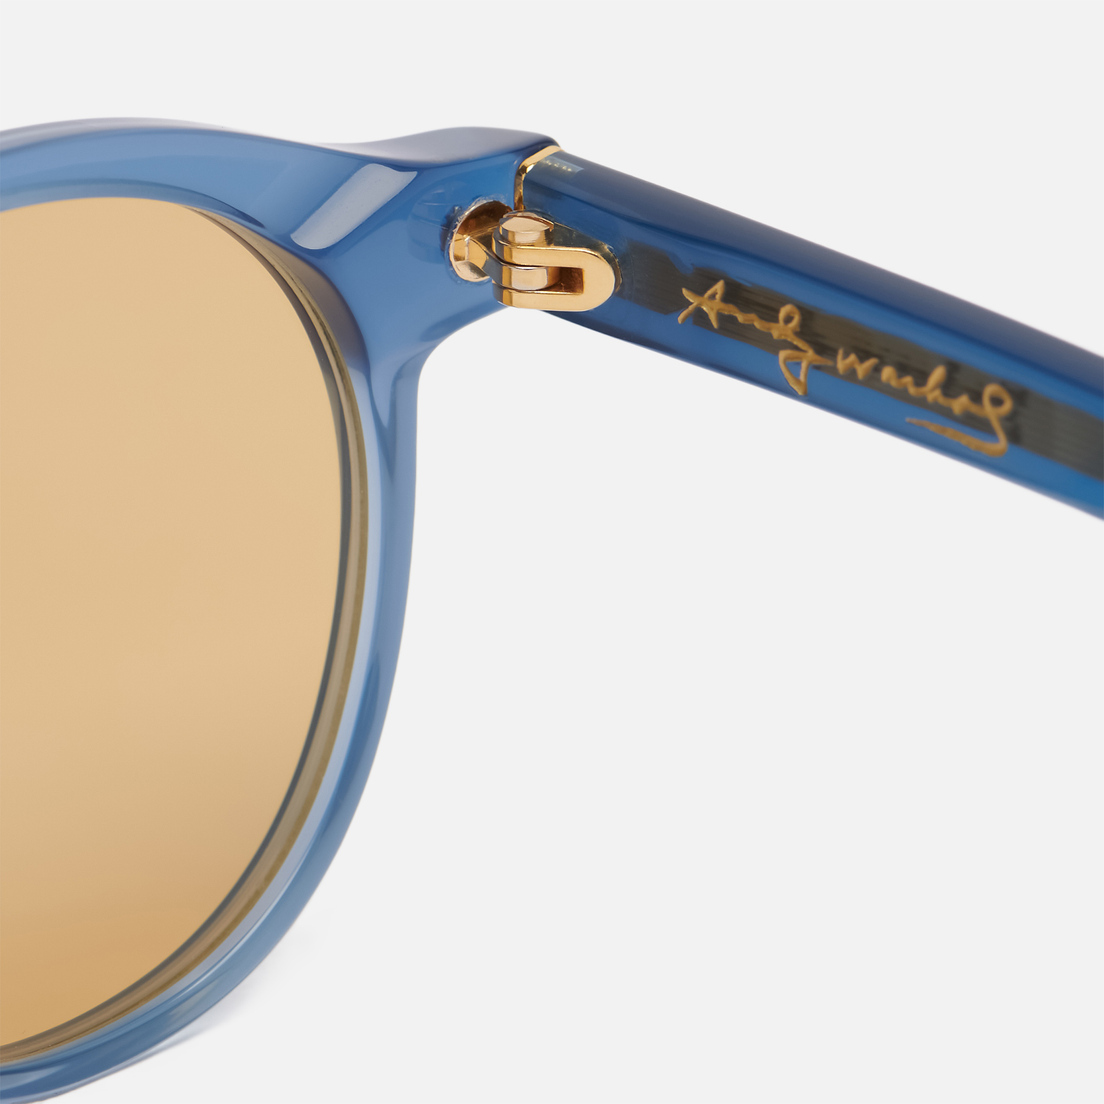 RETROSUPERFUTURE Солнцезащитные очки x Andy Warhol The Iconic Series